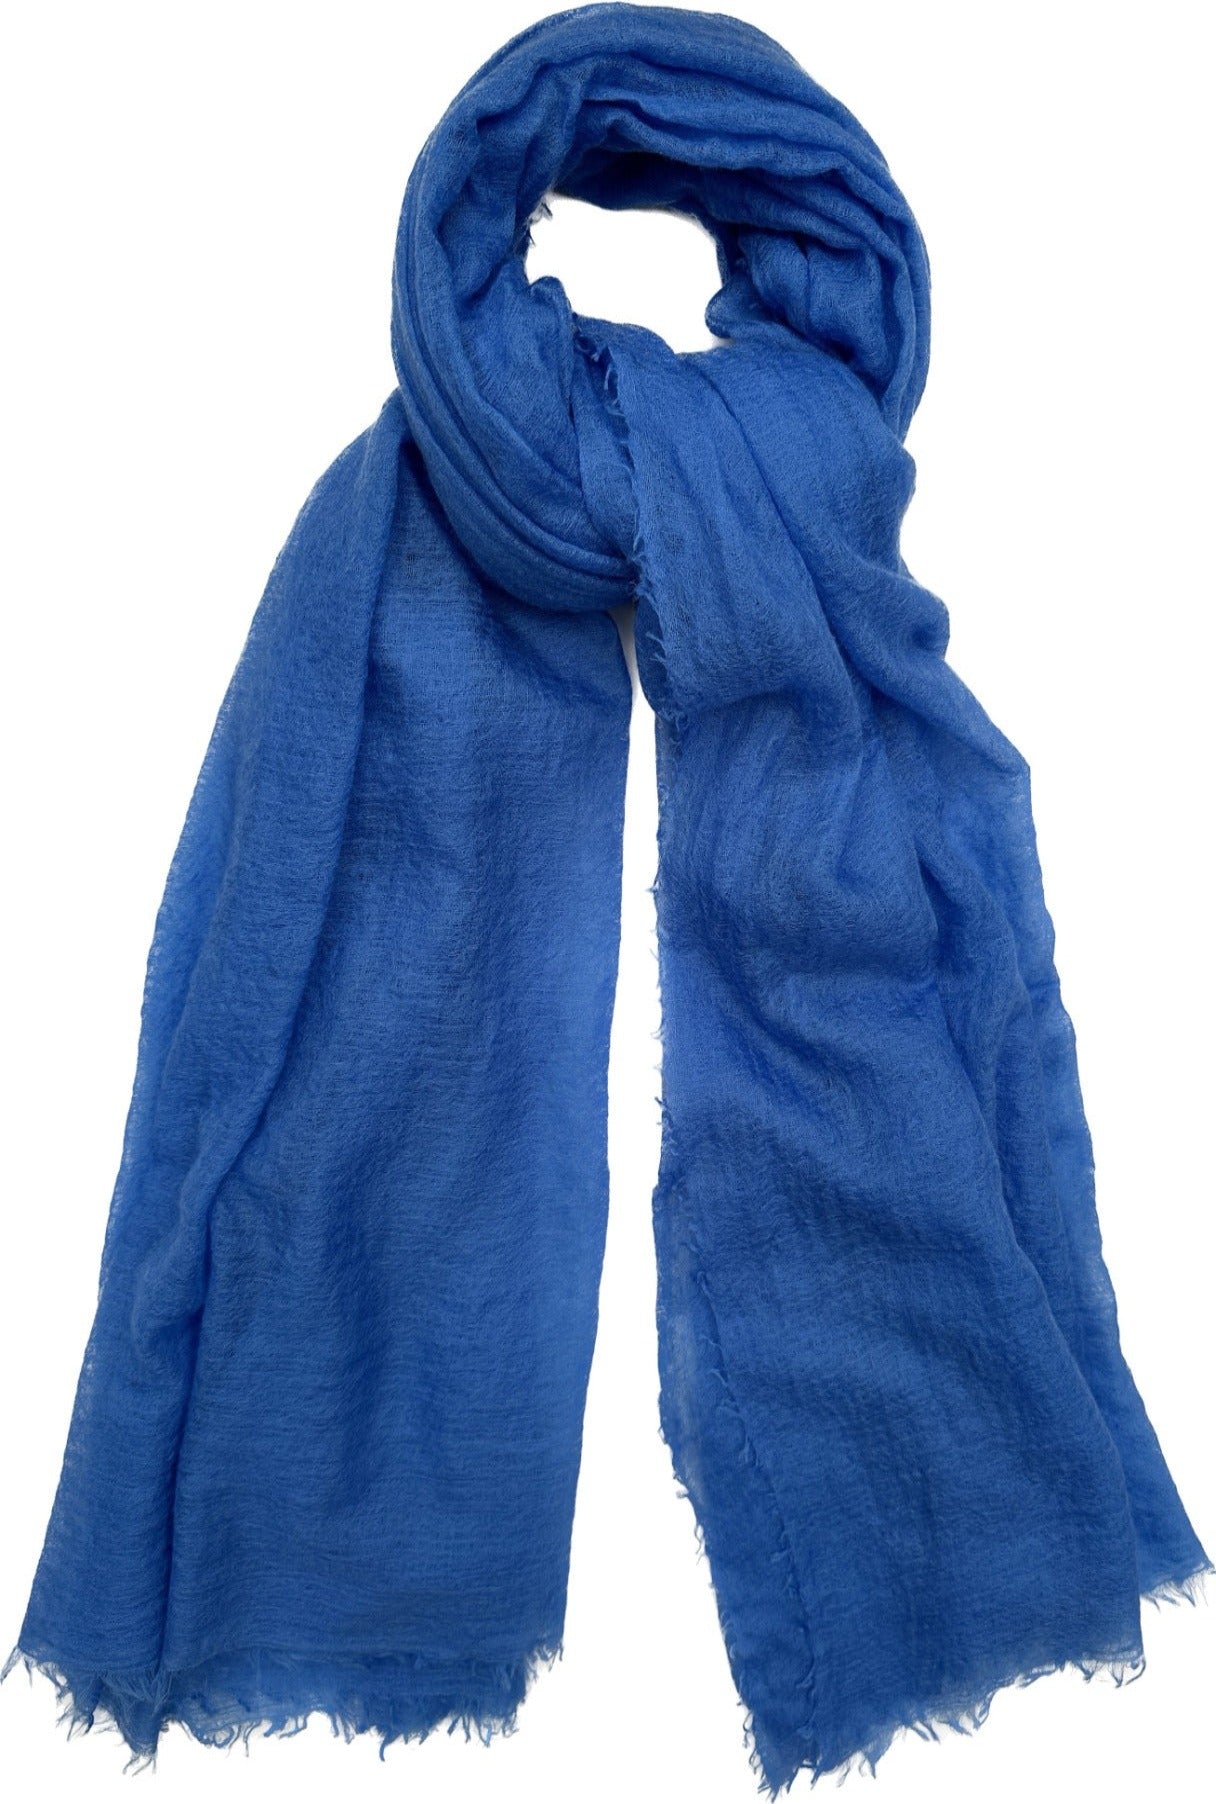 cornflower blue marmee scarf